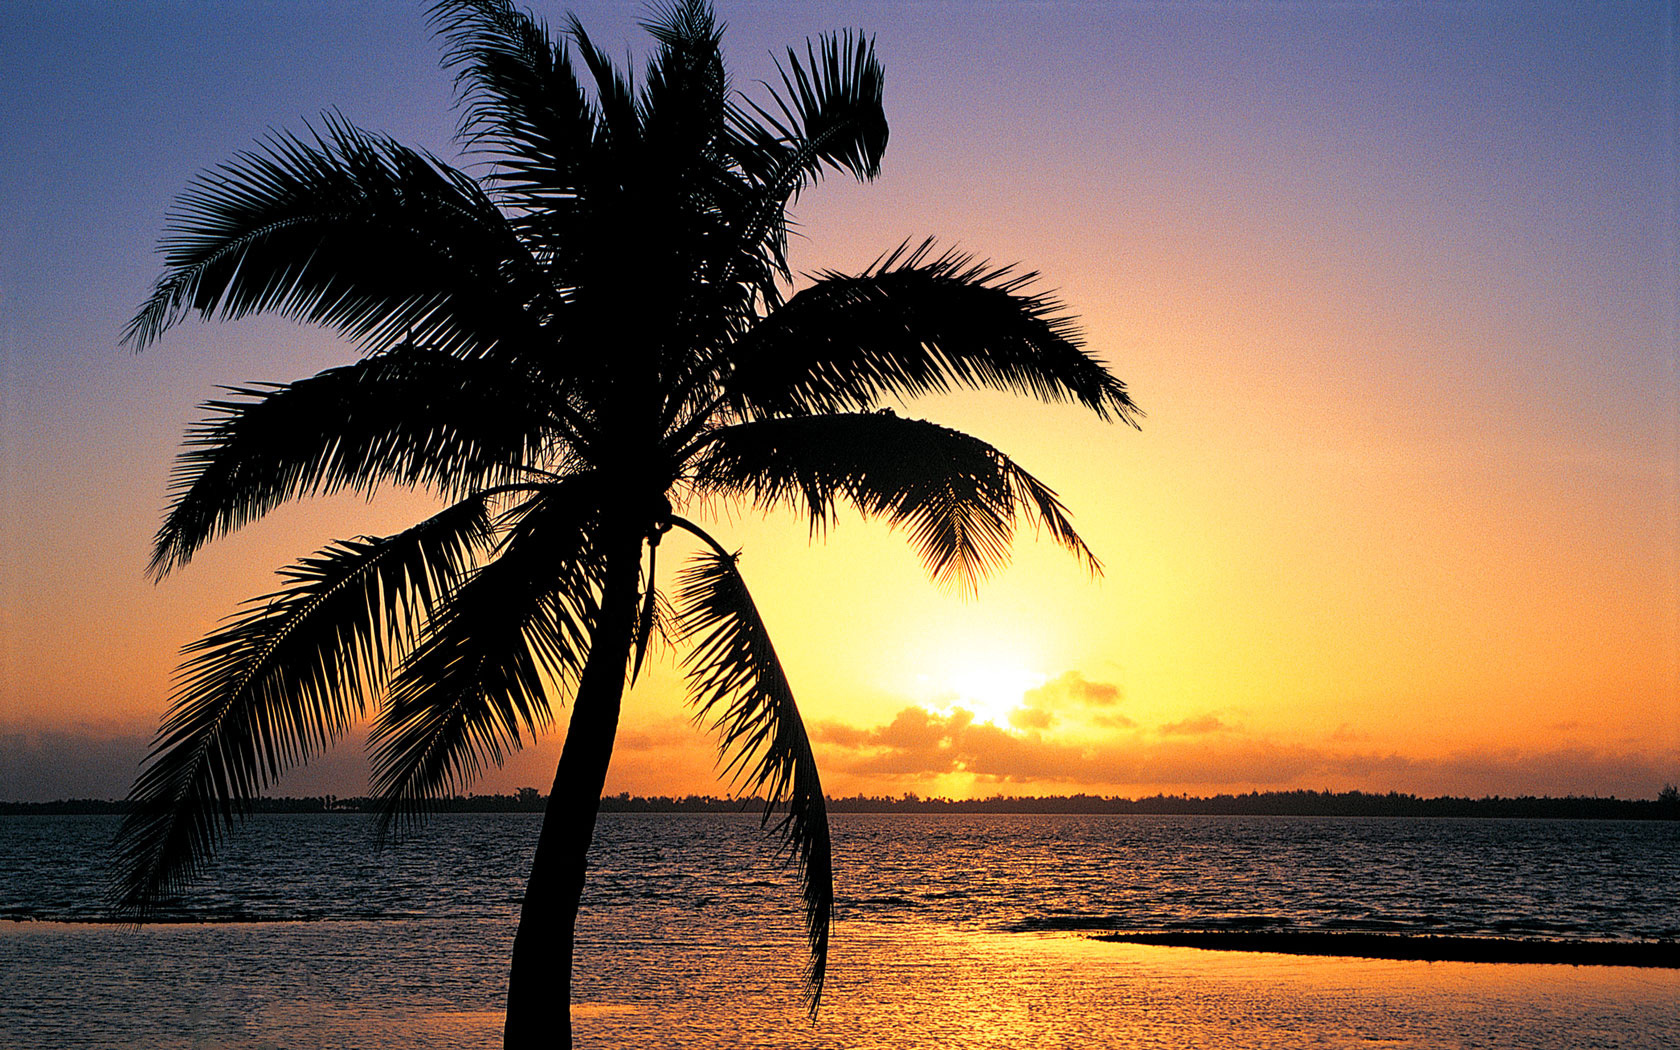 Orange sunset on the tropic beach background